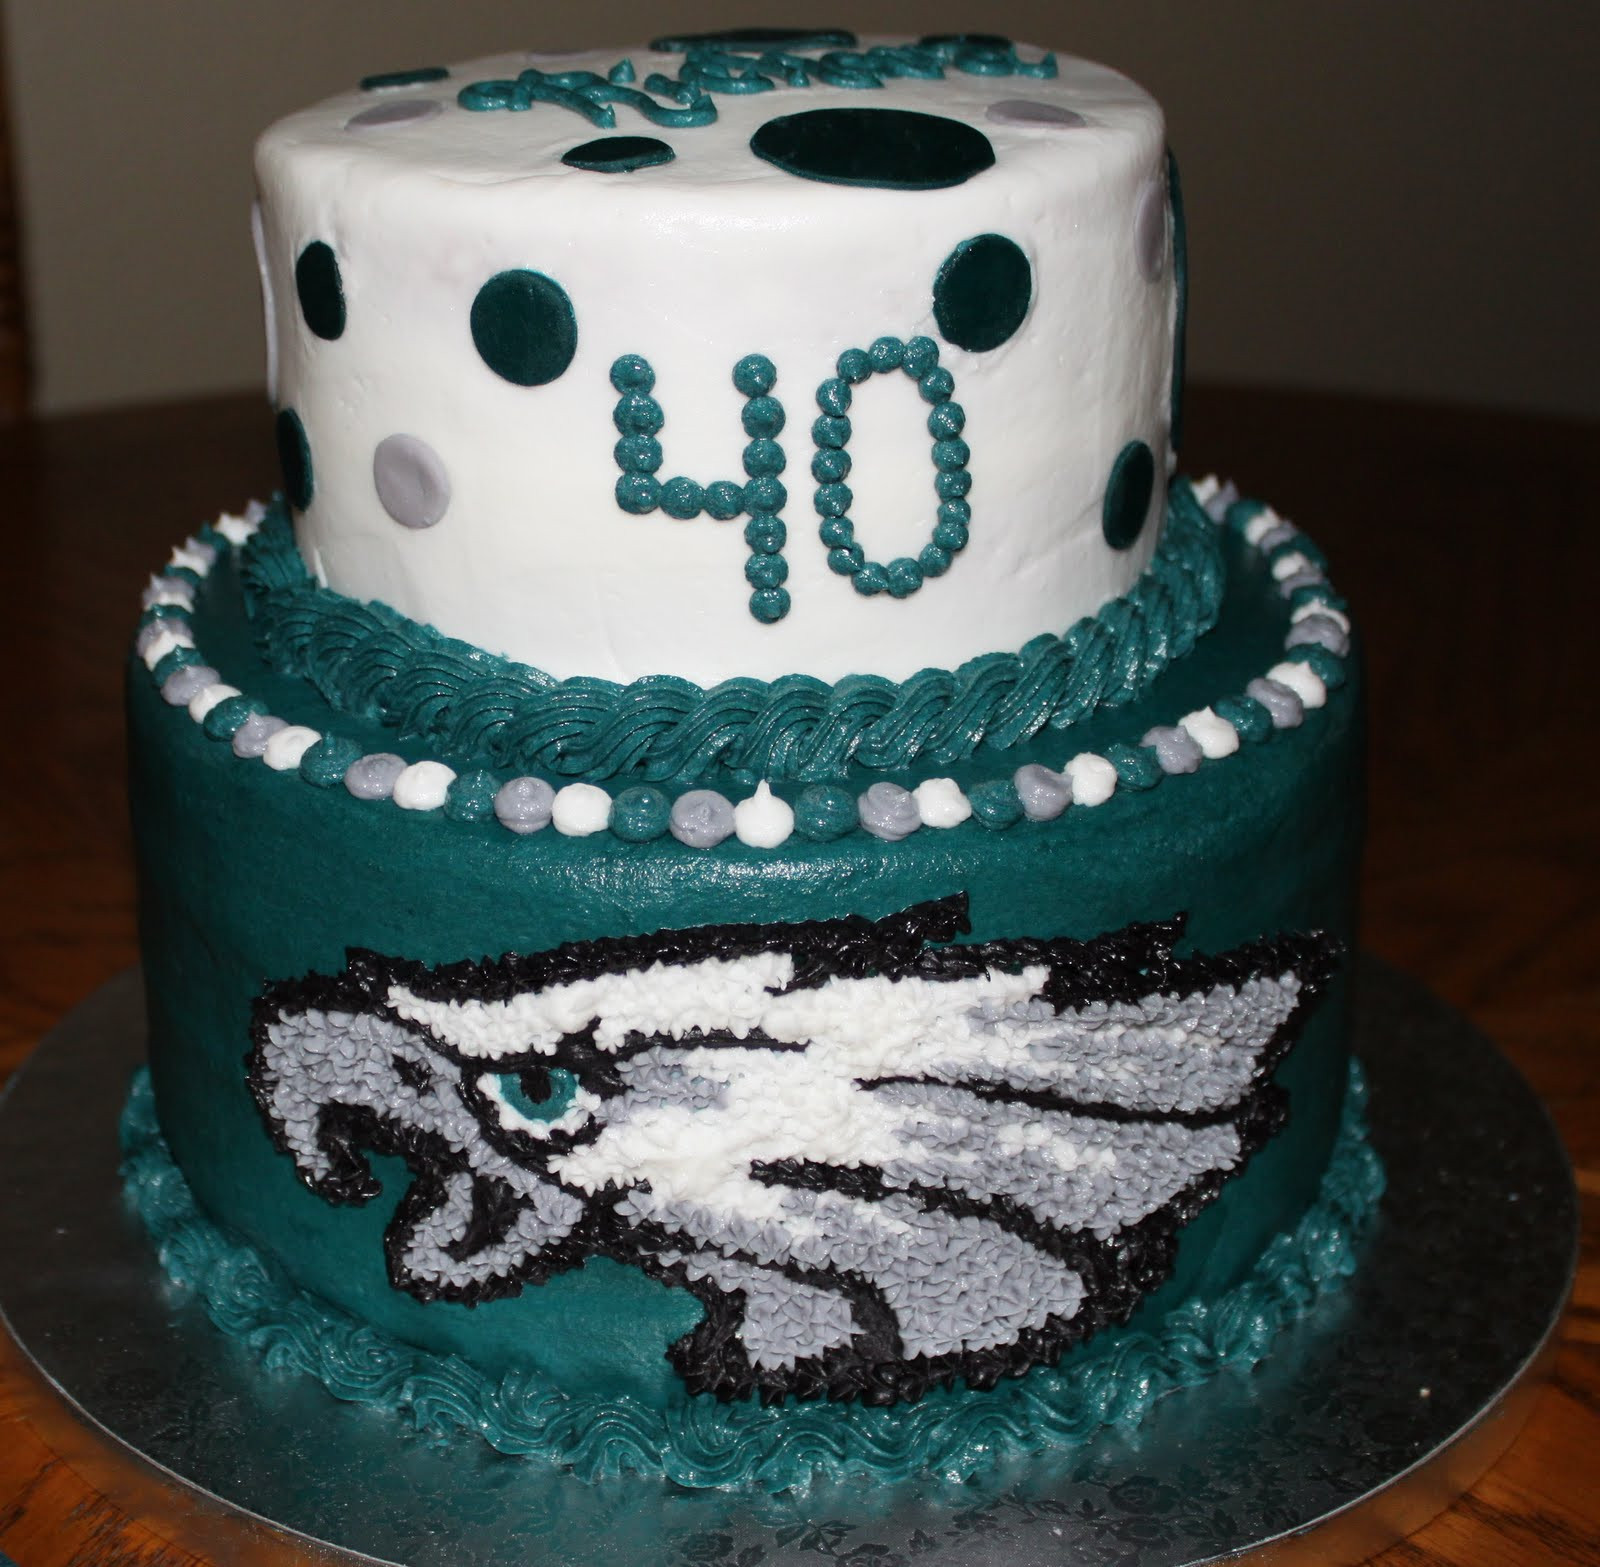 Best ideas about Birthday Cake Philadelphia
. Save or Pin A Little Bite of Heaven Philadelphia Eagles Cake Now.